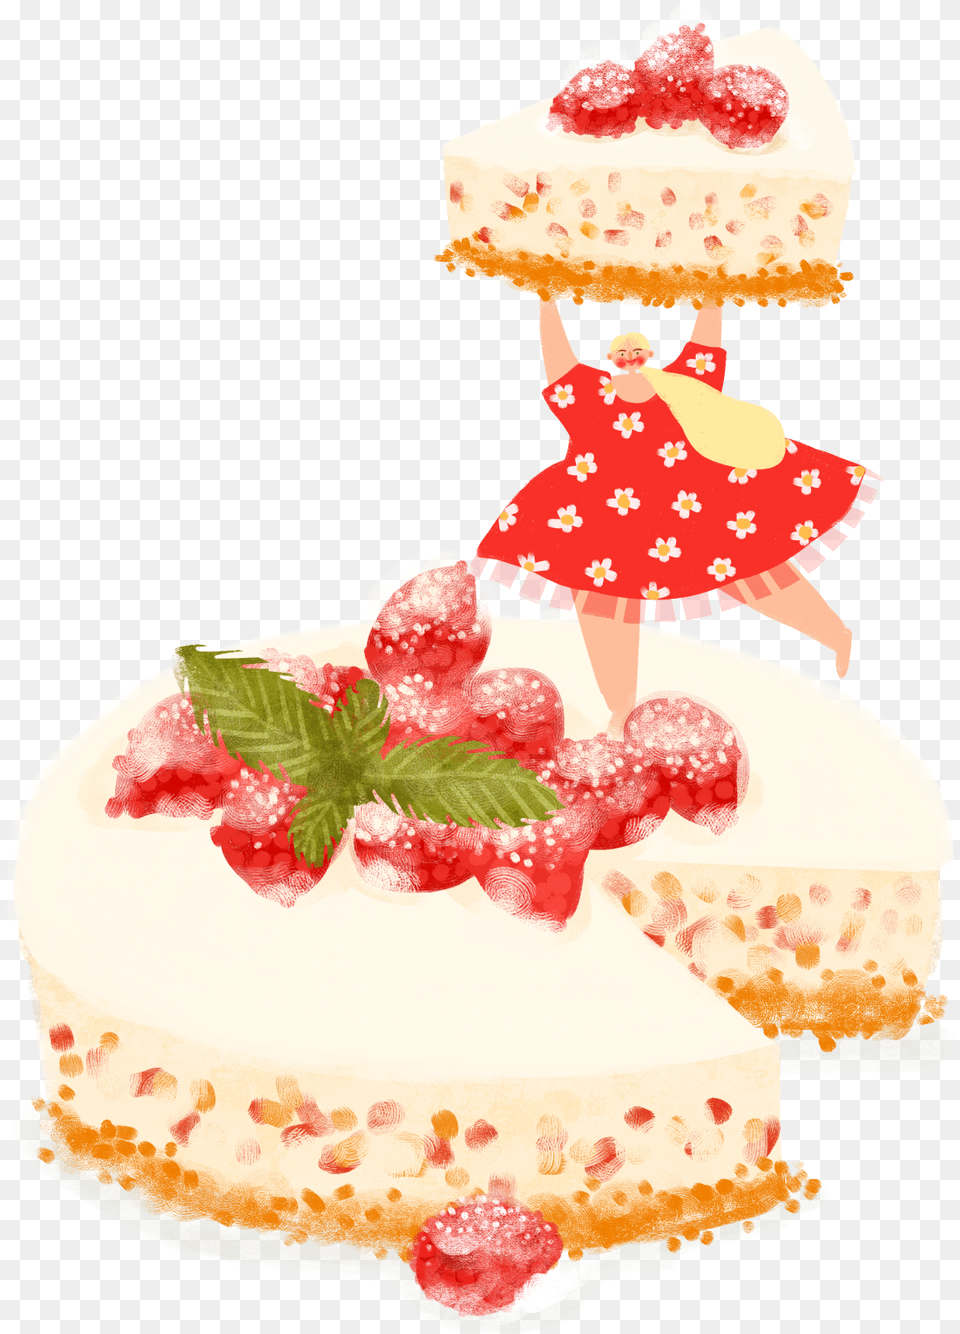 Transparent Cheesecake Fruit Cake, Torte, Dessert, Food, Birthday Cake Png Image